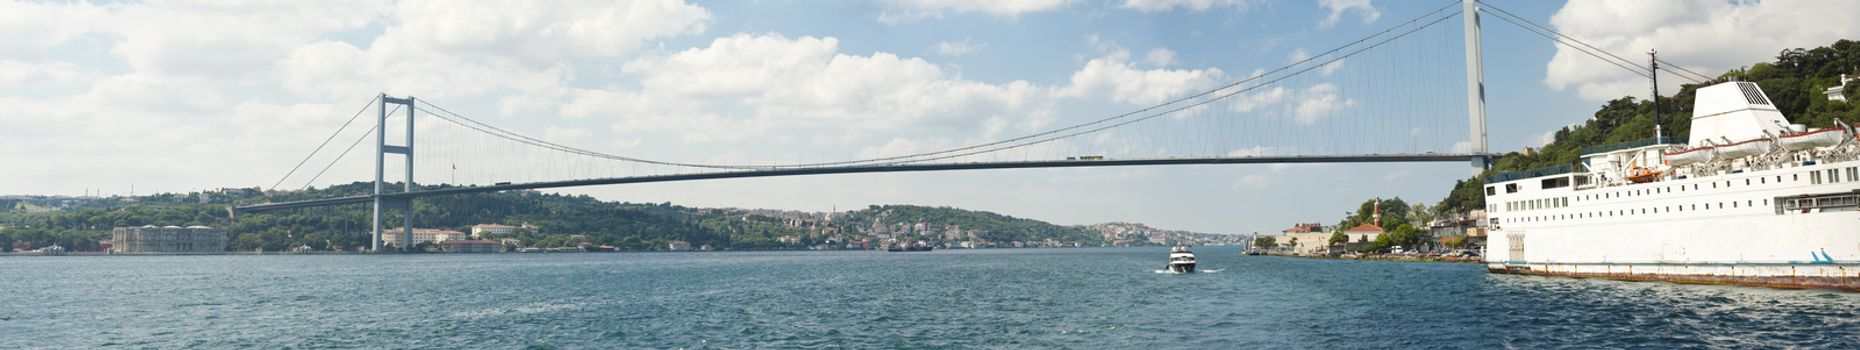 Ataturk suspension bridge spanning the Bosphorus river in Istanbul, Turkey against a blue sky